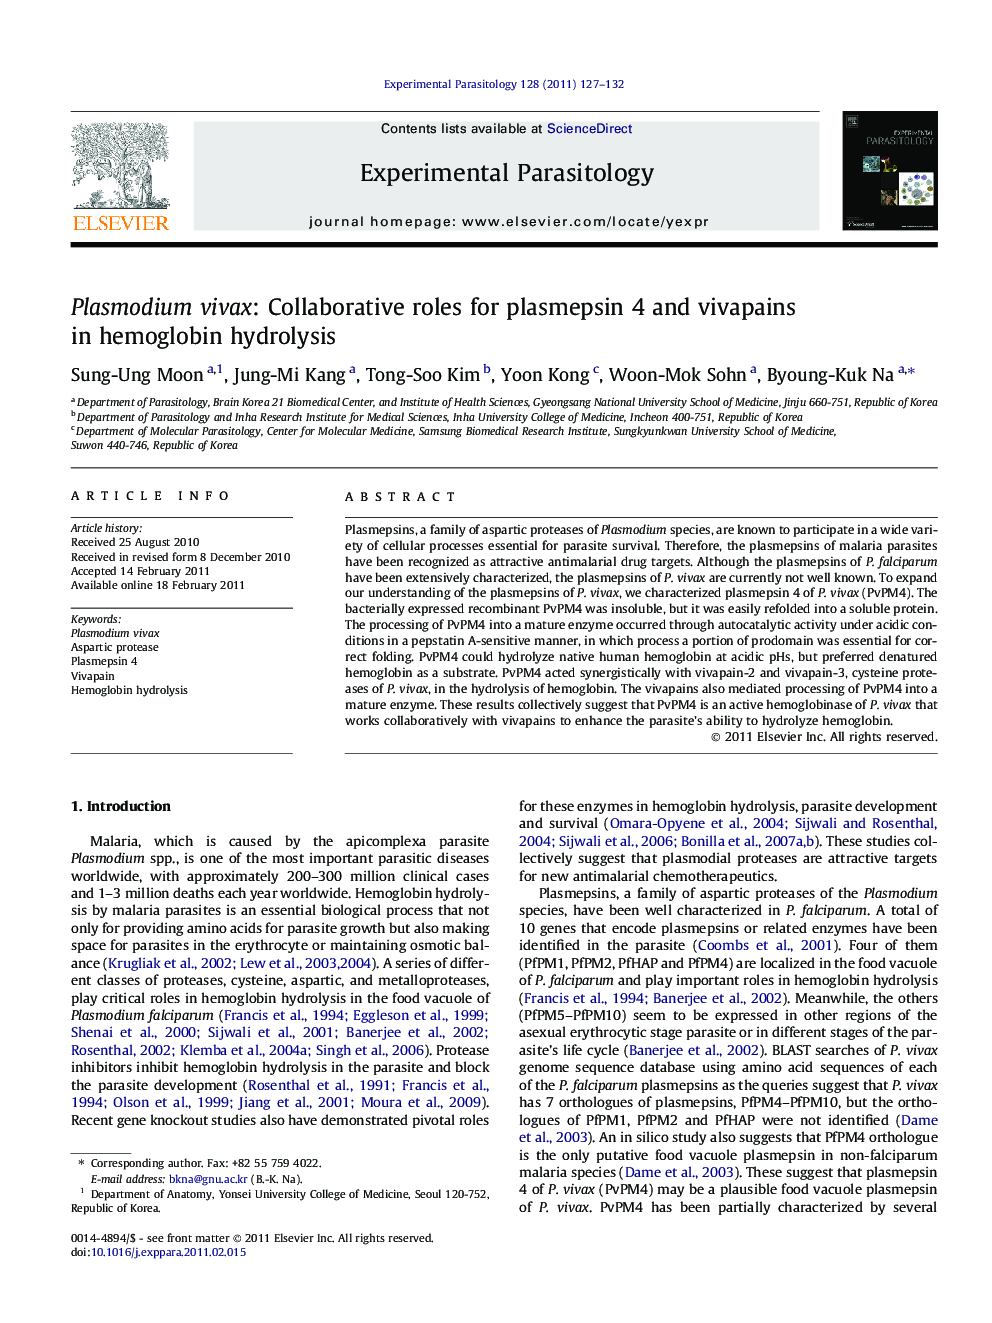 Plasmodium vivax: Collaborative roles for plasmepsin 4 and vivapains in hemoglobin hydrolysis